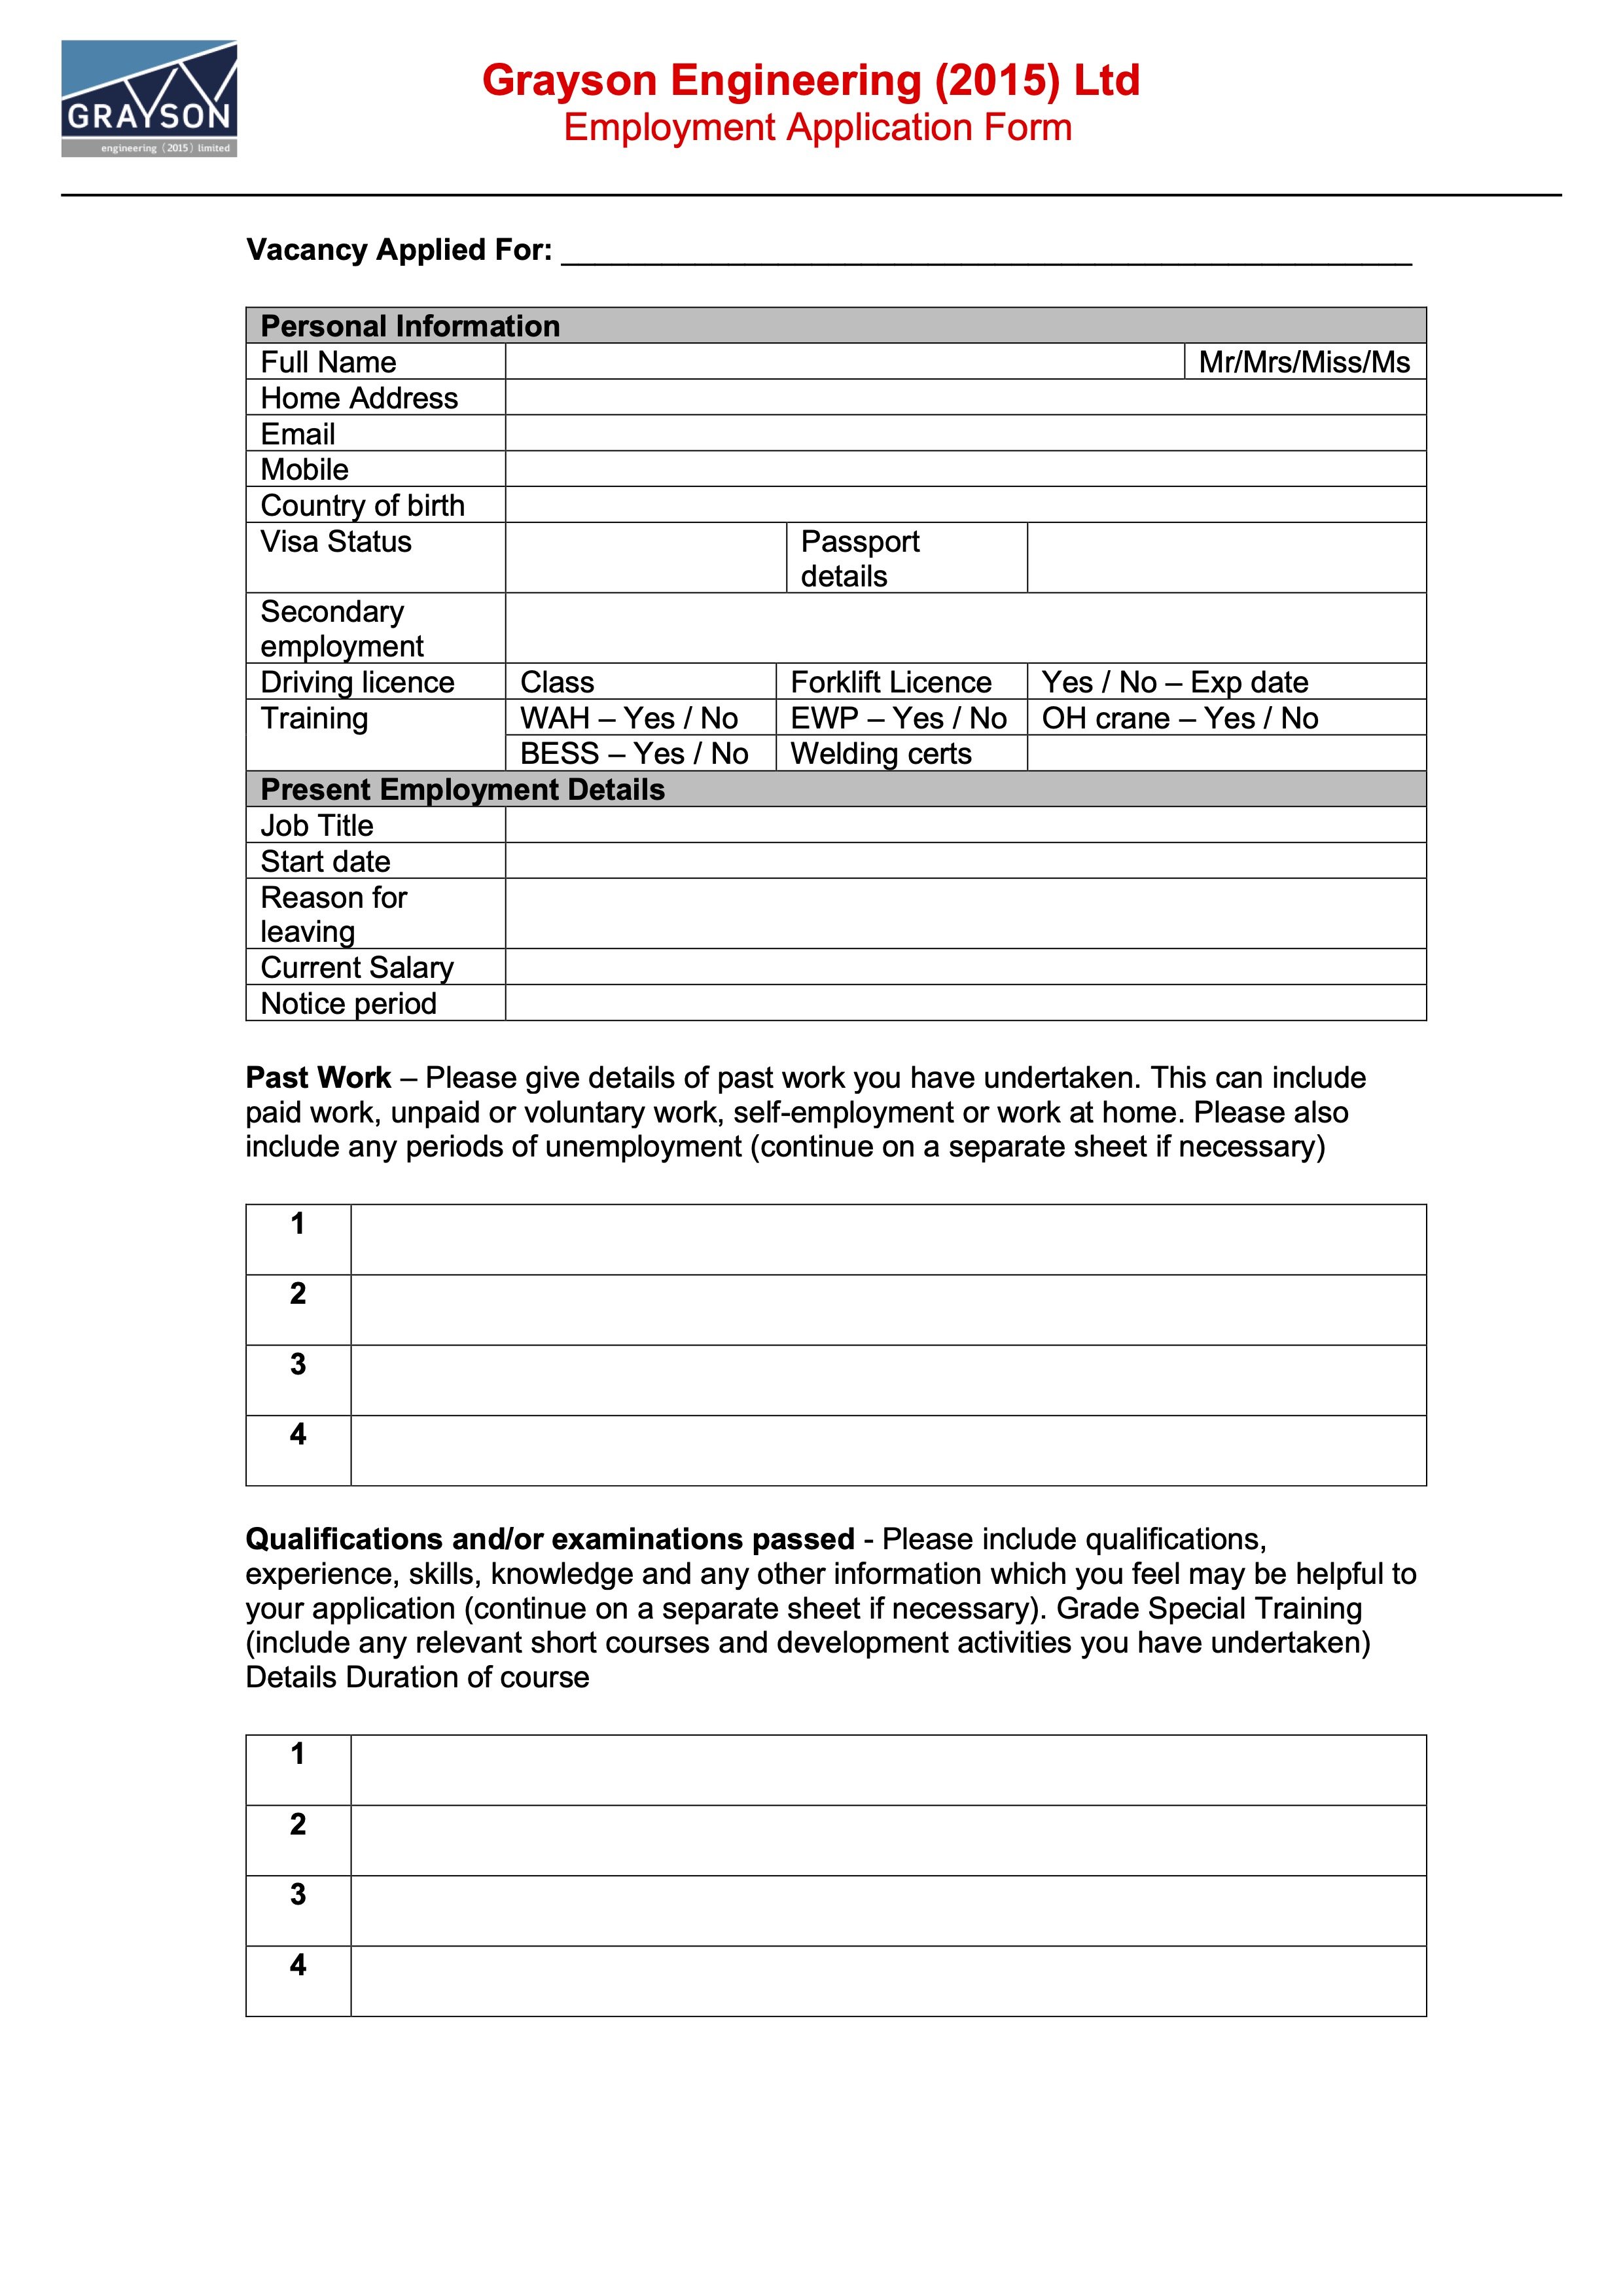 Employment Application Form (Edited Version) (dragged) 1.jpg